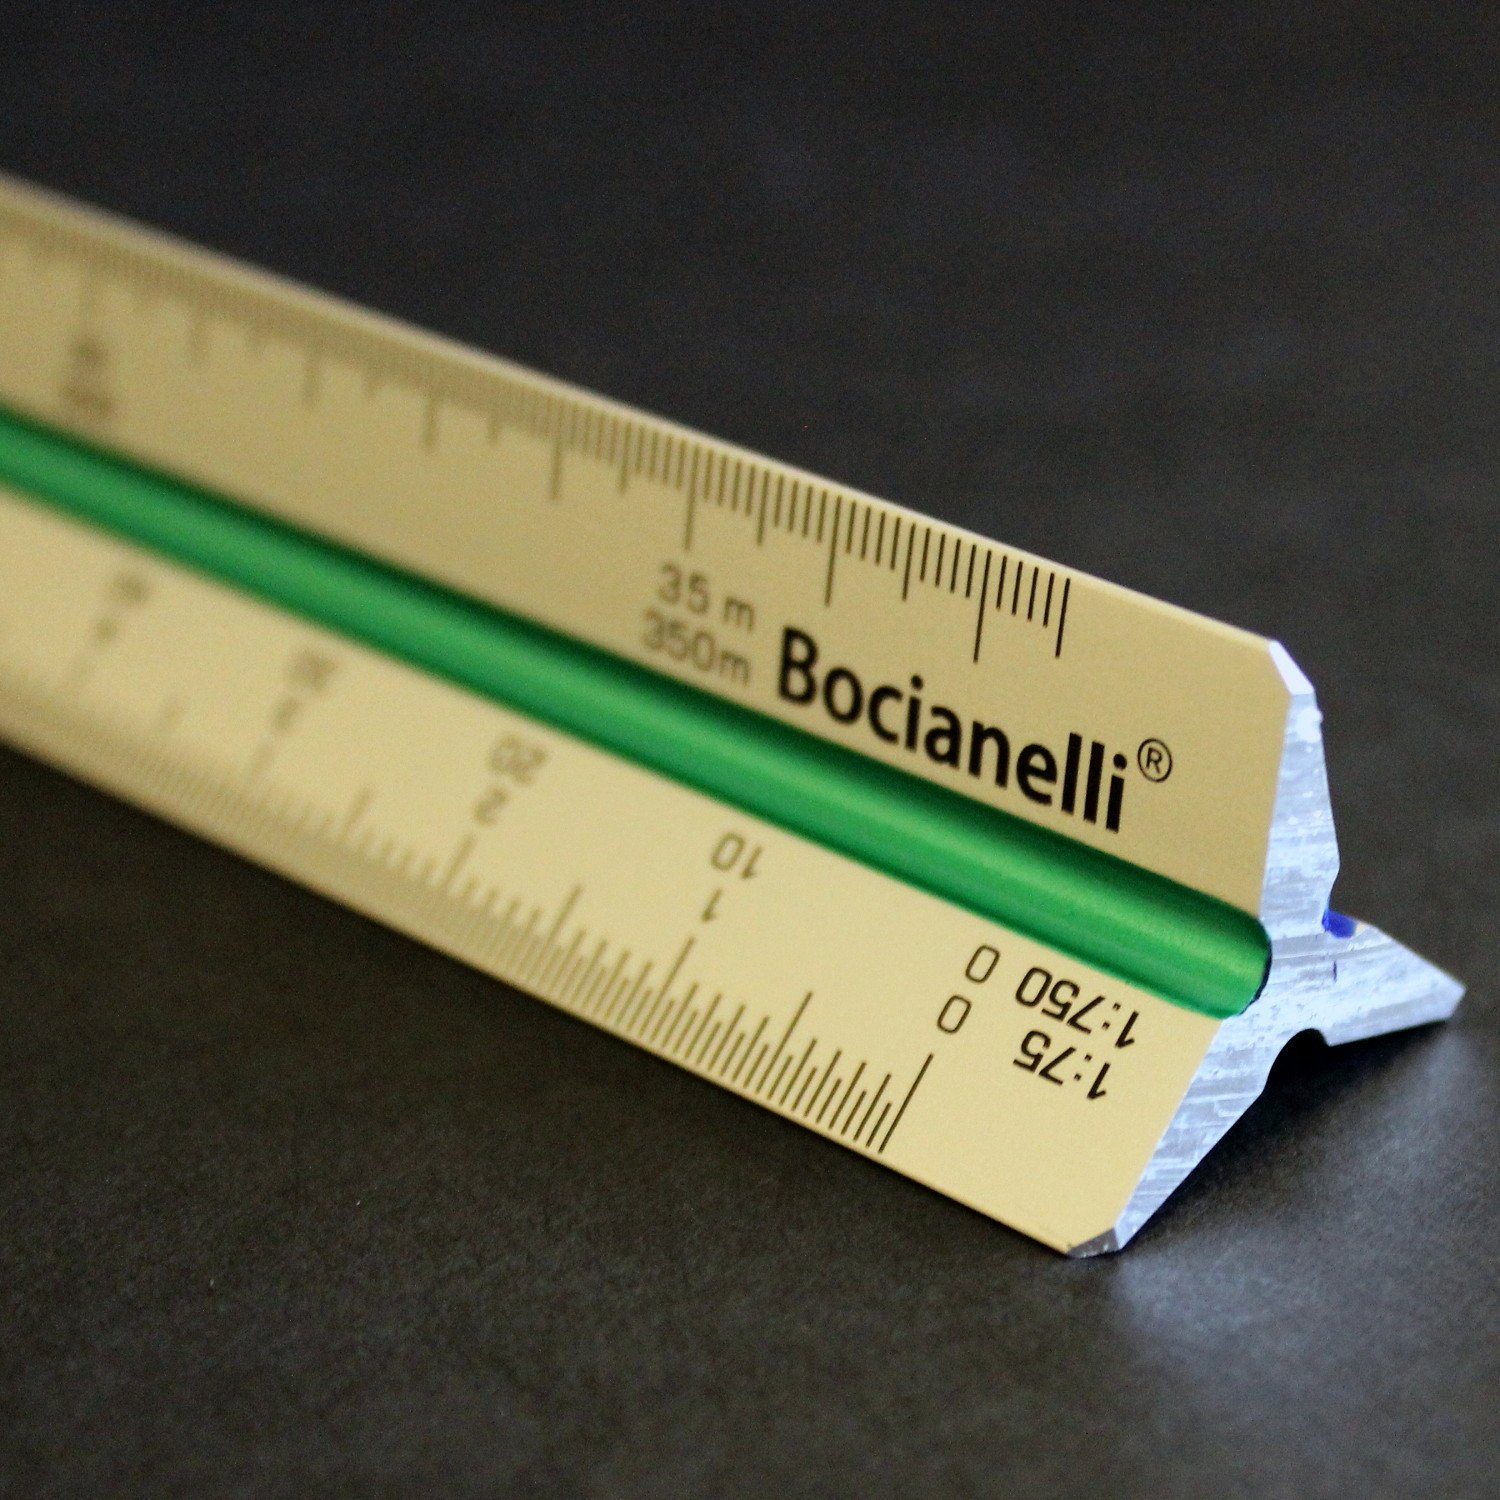 Bocianelli Maßstab Lineal 30 cm Aluminium Dreikantmaßstab Maßstabslineal 1:10 1:20 1:25 1:50 1:75 1:100 1:125 1:200 1:250 1:500 1:750 1:1250 Metall Lineal 30cm für Architekt oder Ingenieur